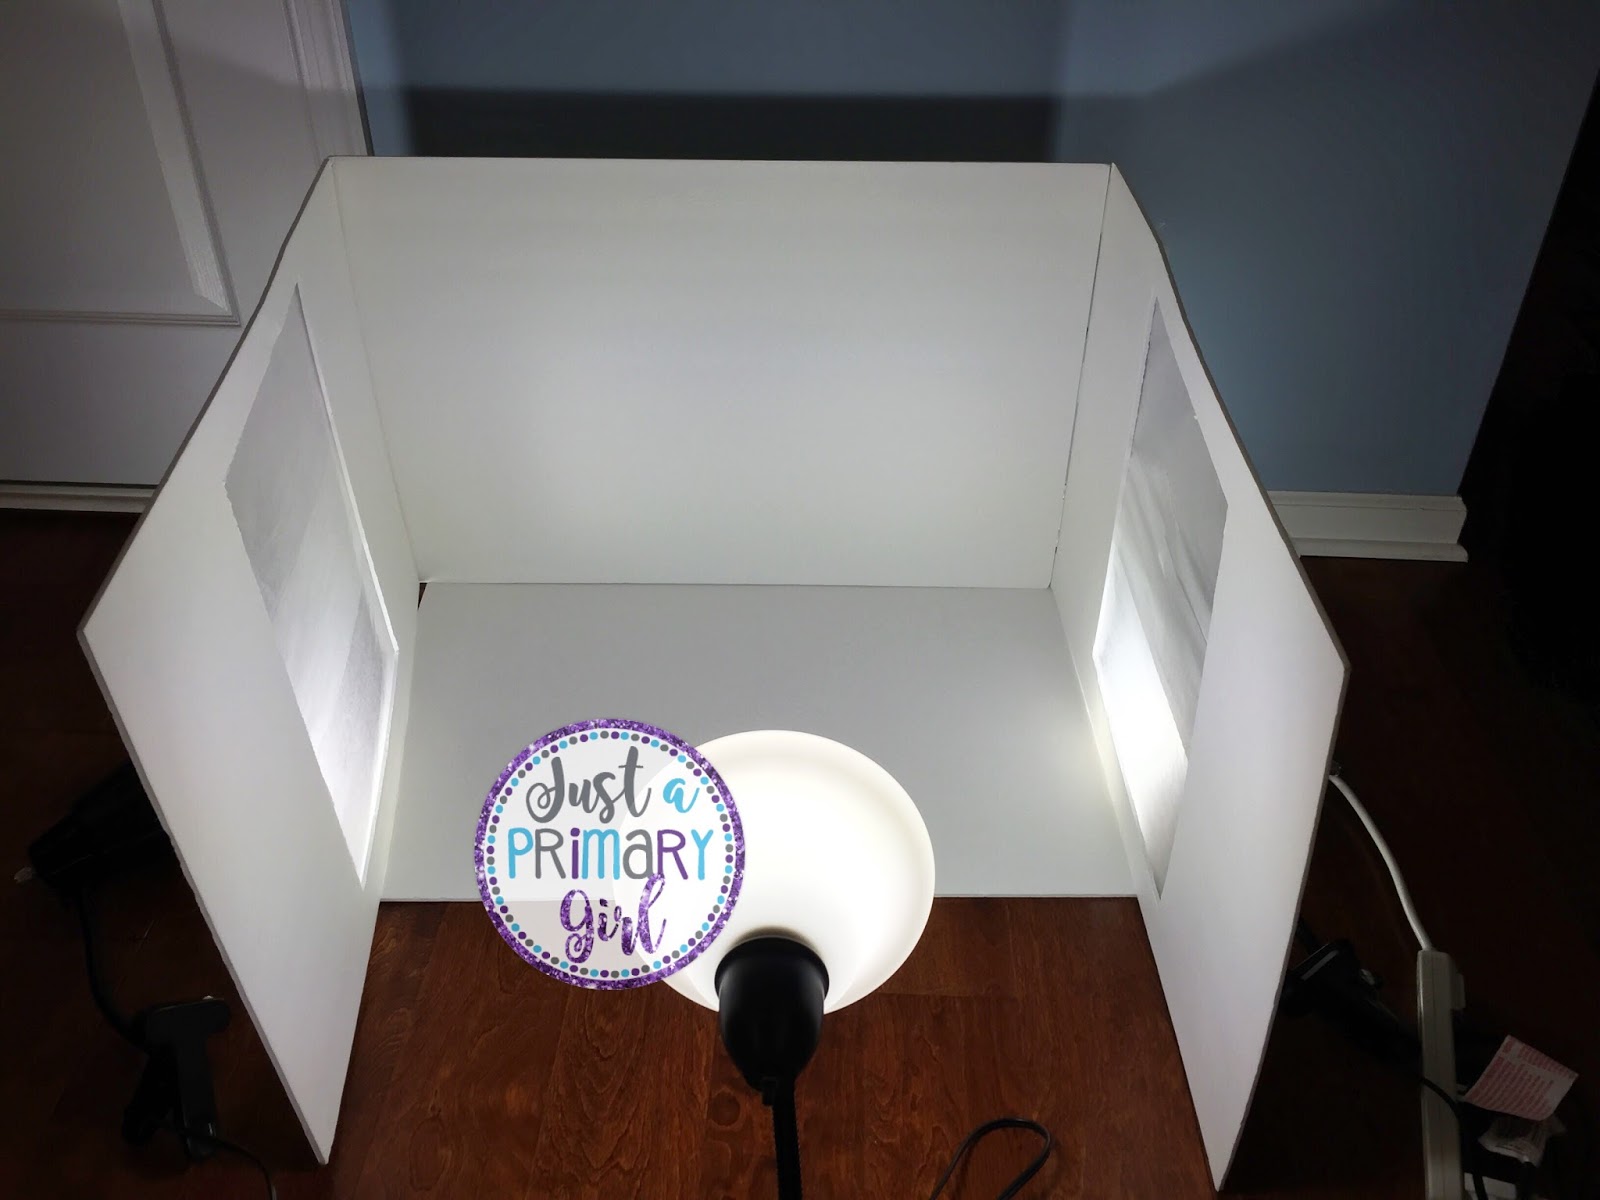 DIY Light Box for Less than $60 Dollars